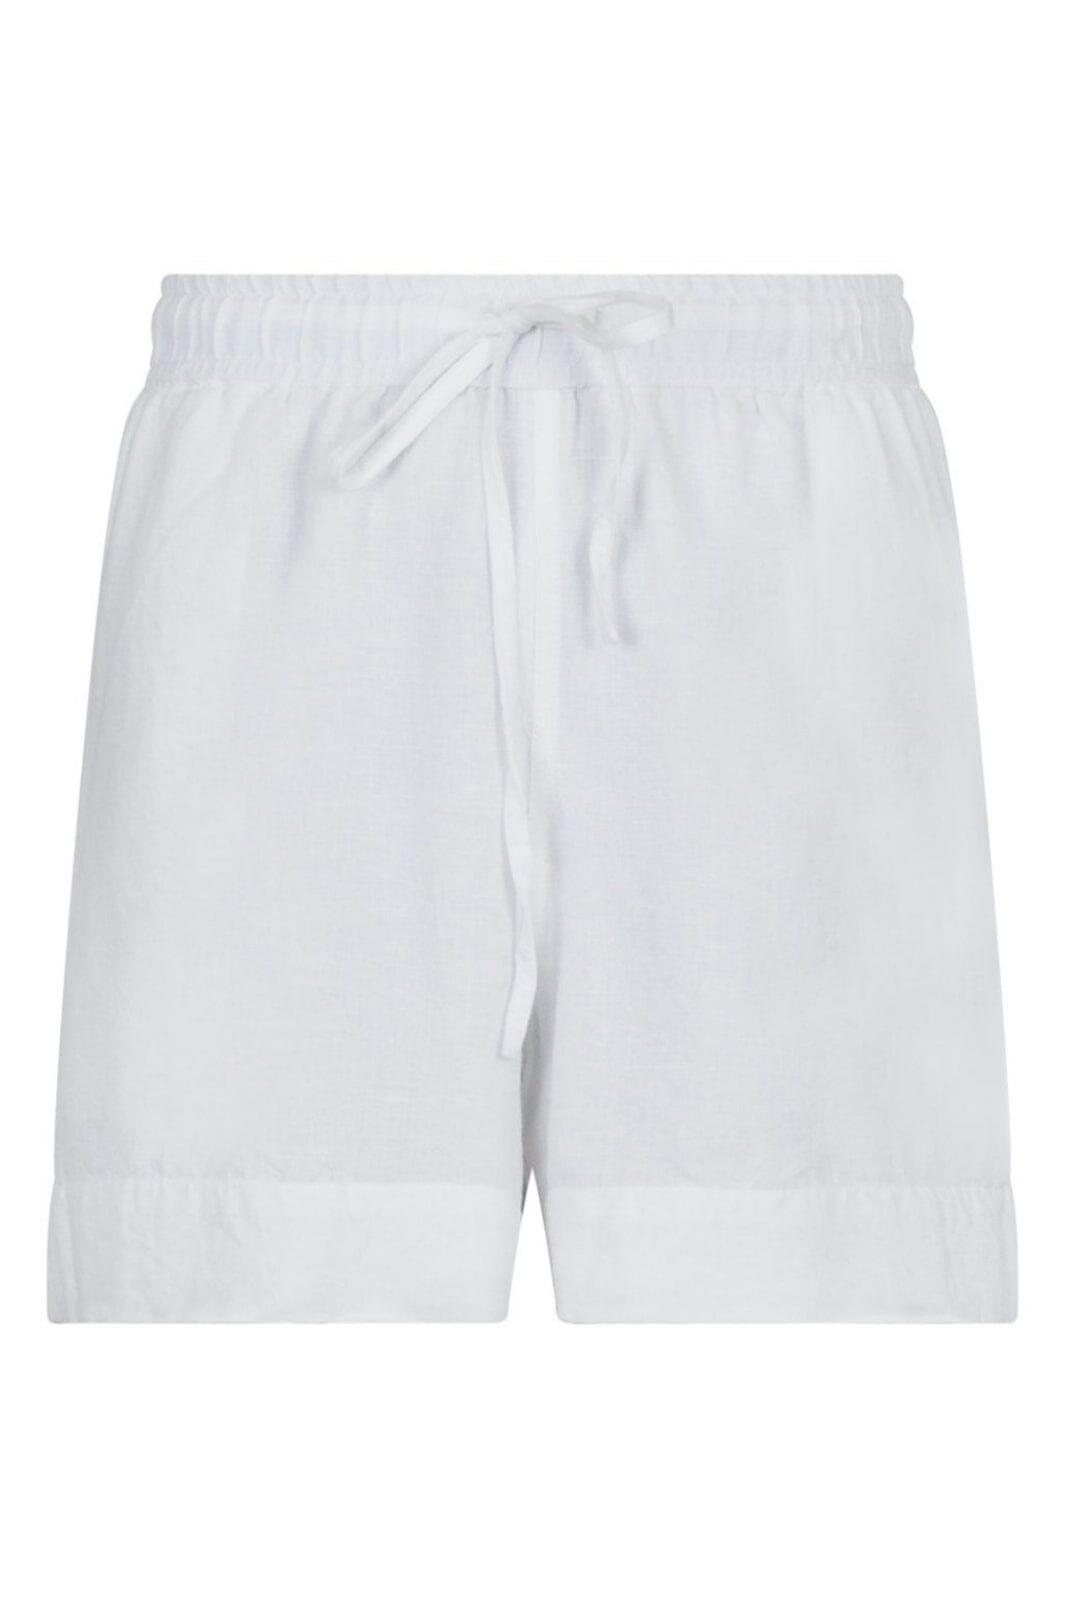 Neo Noir - Shea Linen Shorts - White Shorts 